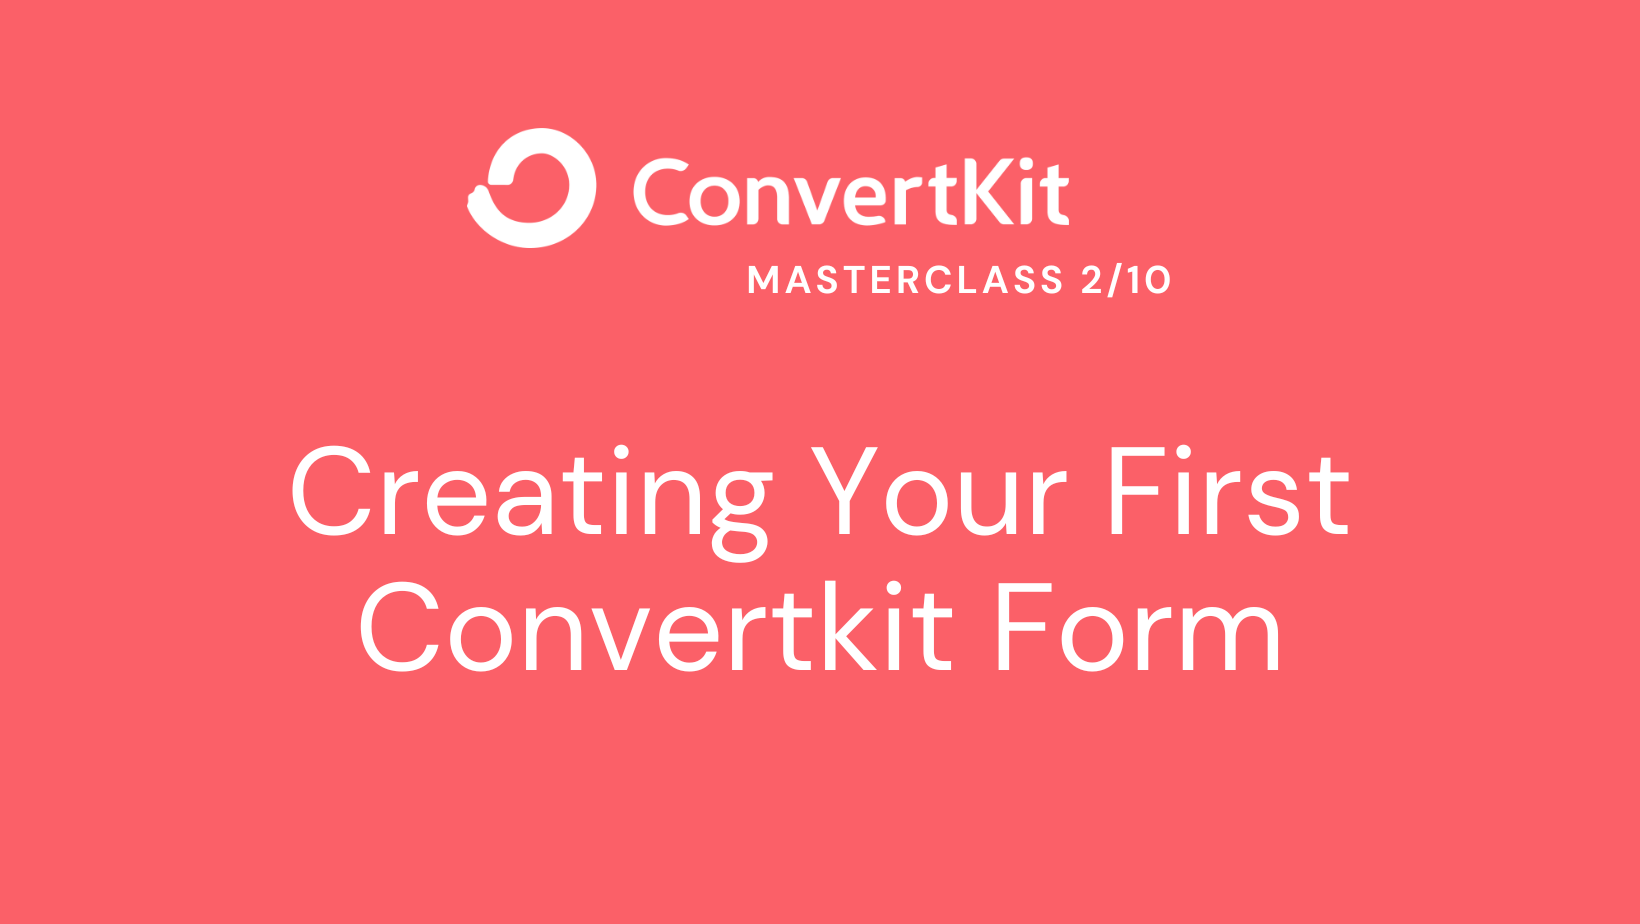 ConvertKit Masterclass 2/10 Creating Your First Convertkit Form